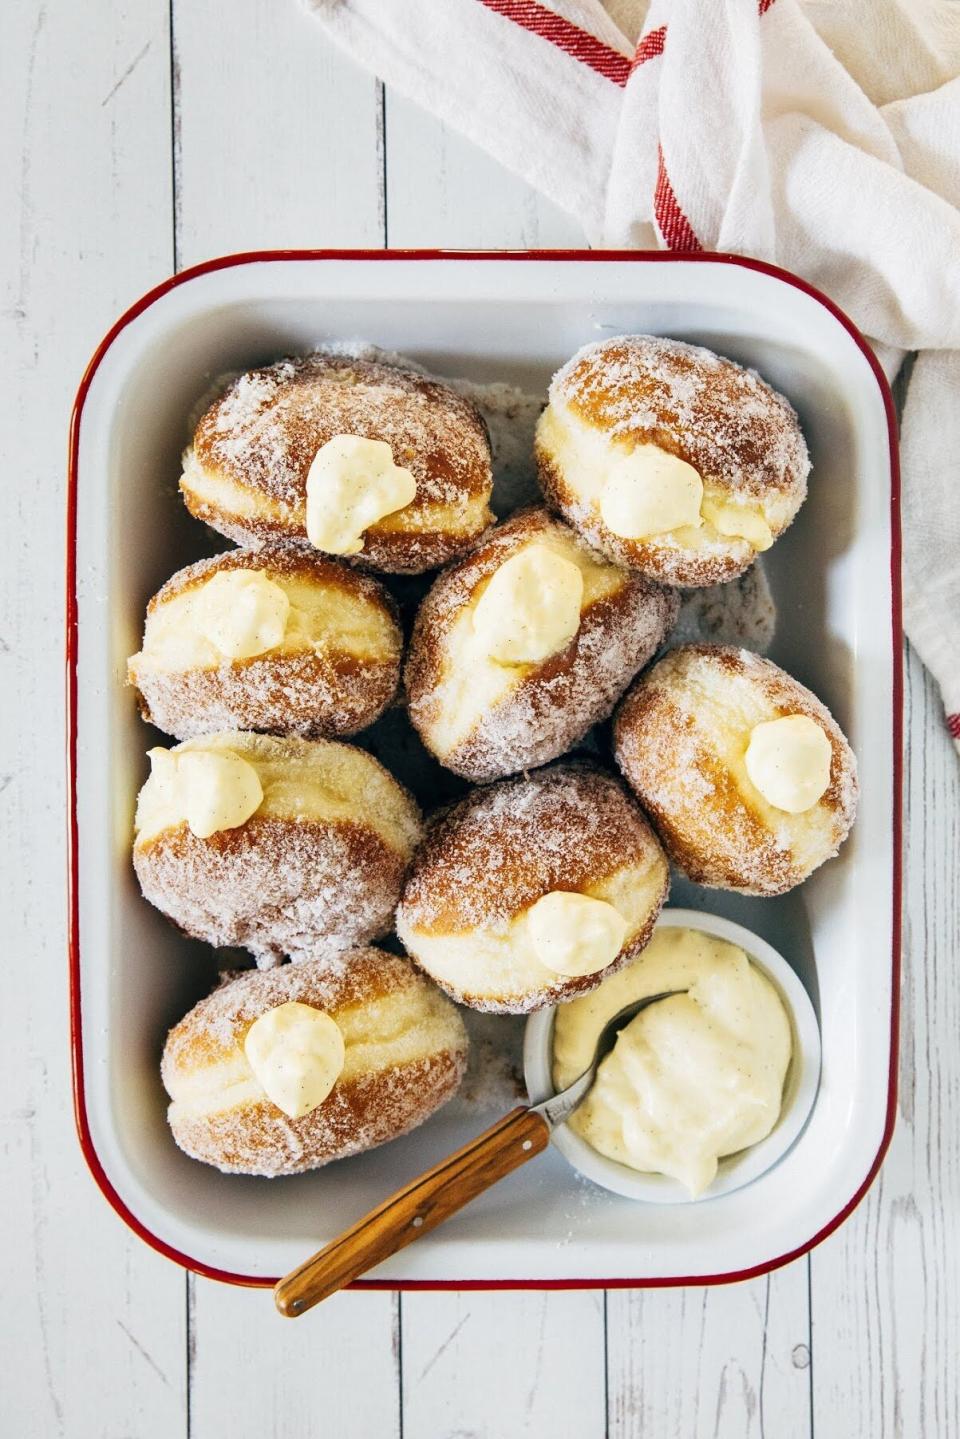 <strong><a href="https://www.hummingbirdhigh.com/2019/03/vanilla-custard-bread-ahead-donuts.html" target="_blank" rel="noopener noreferrer">Get the Vanilla Custard Doughnuts recipe from Hummingbird High</a></strong>